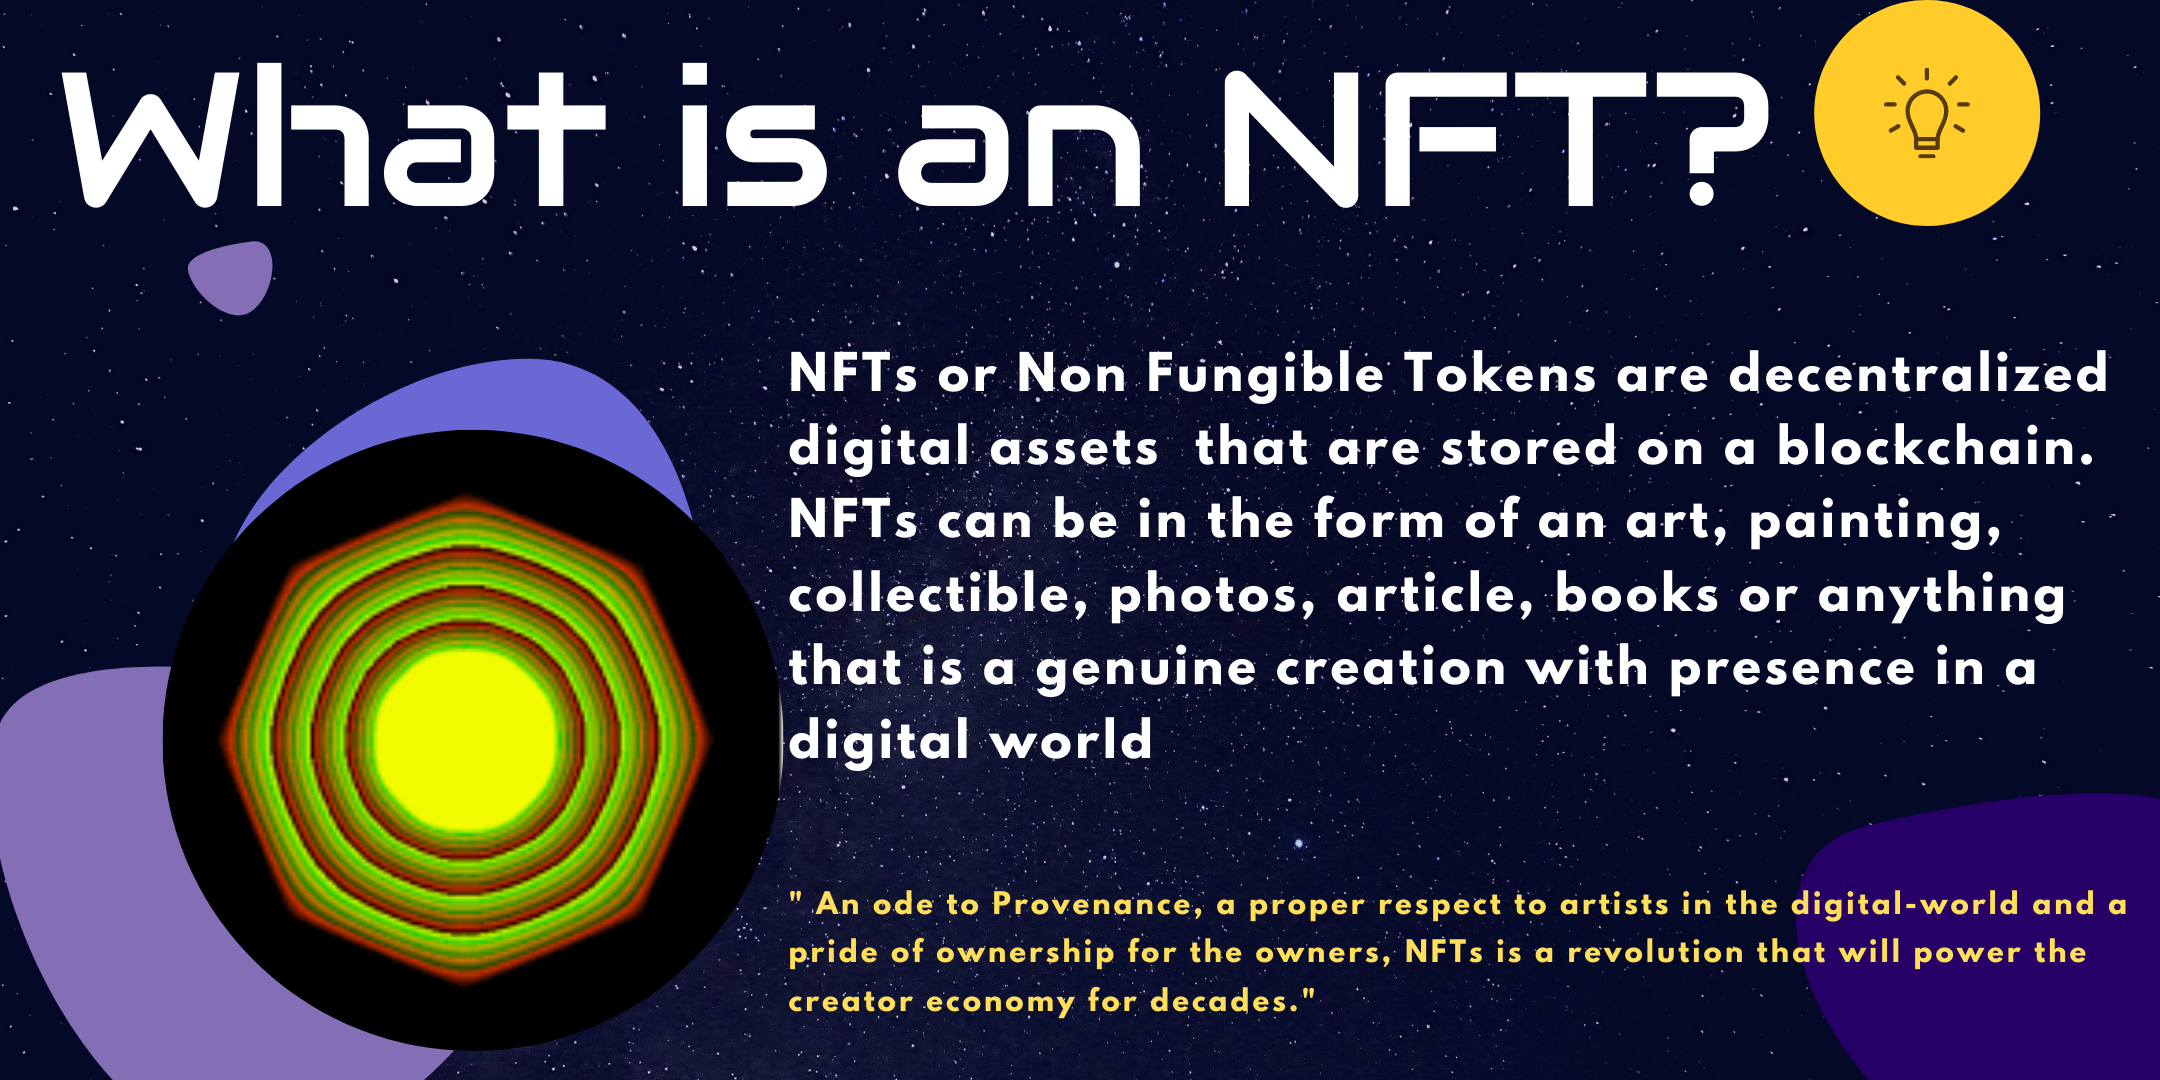 HackerVerse Definition of NFTs